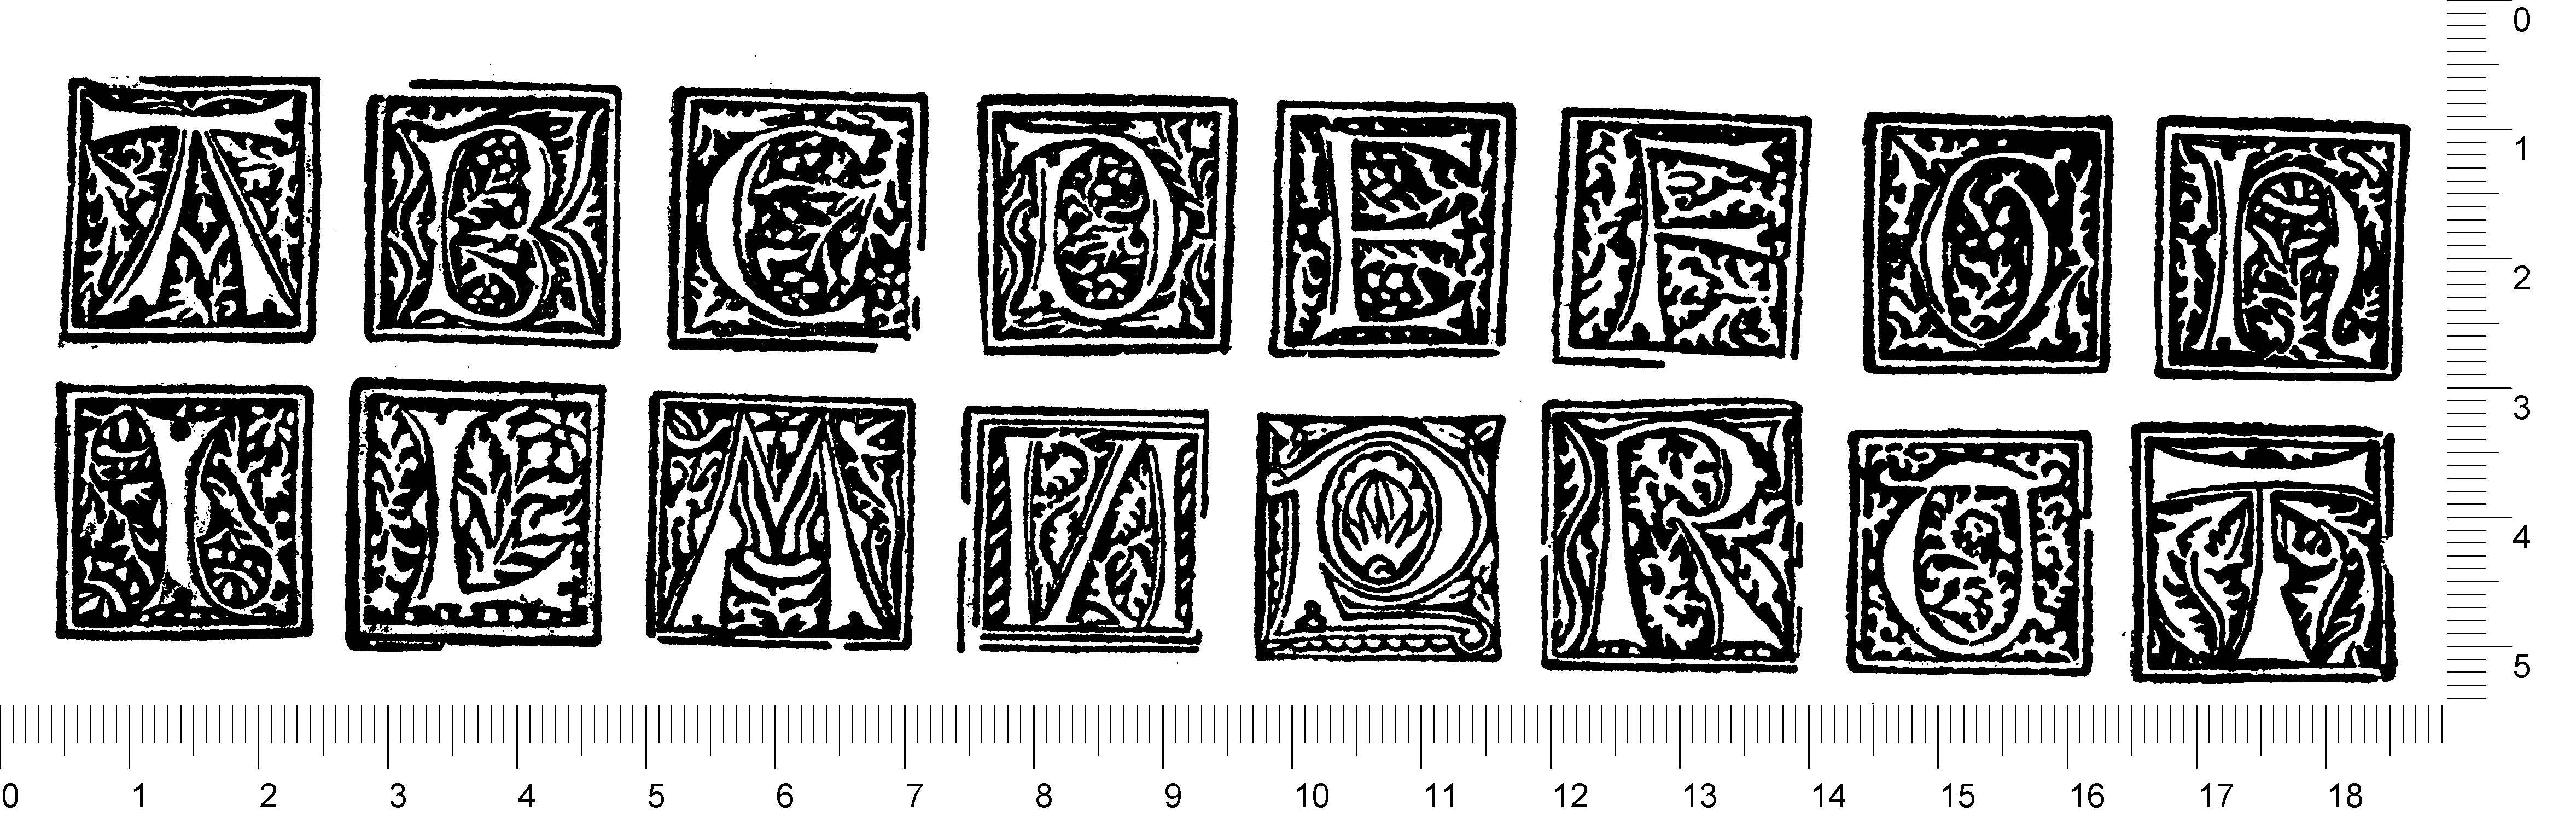 Abbildung der GfT-Tafeln vonGfT1414.3